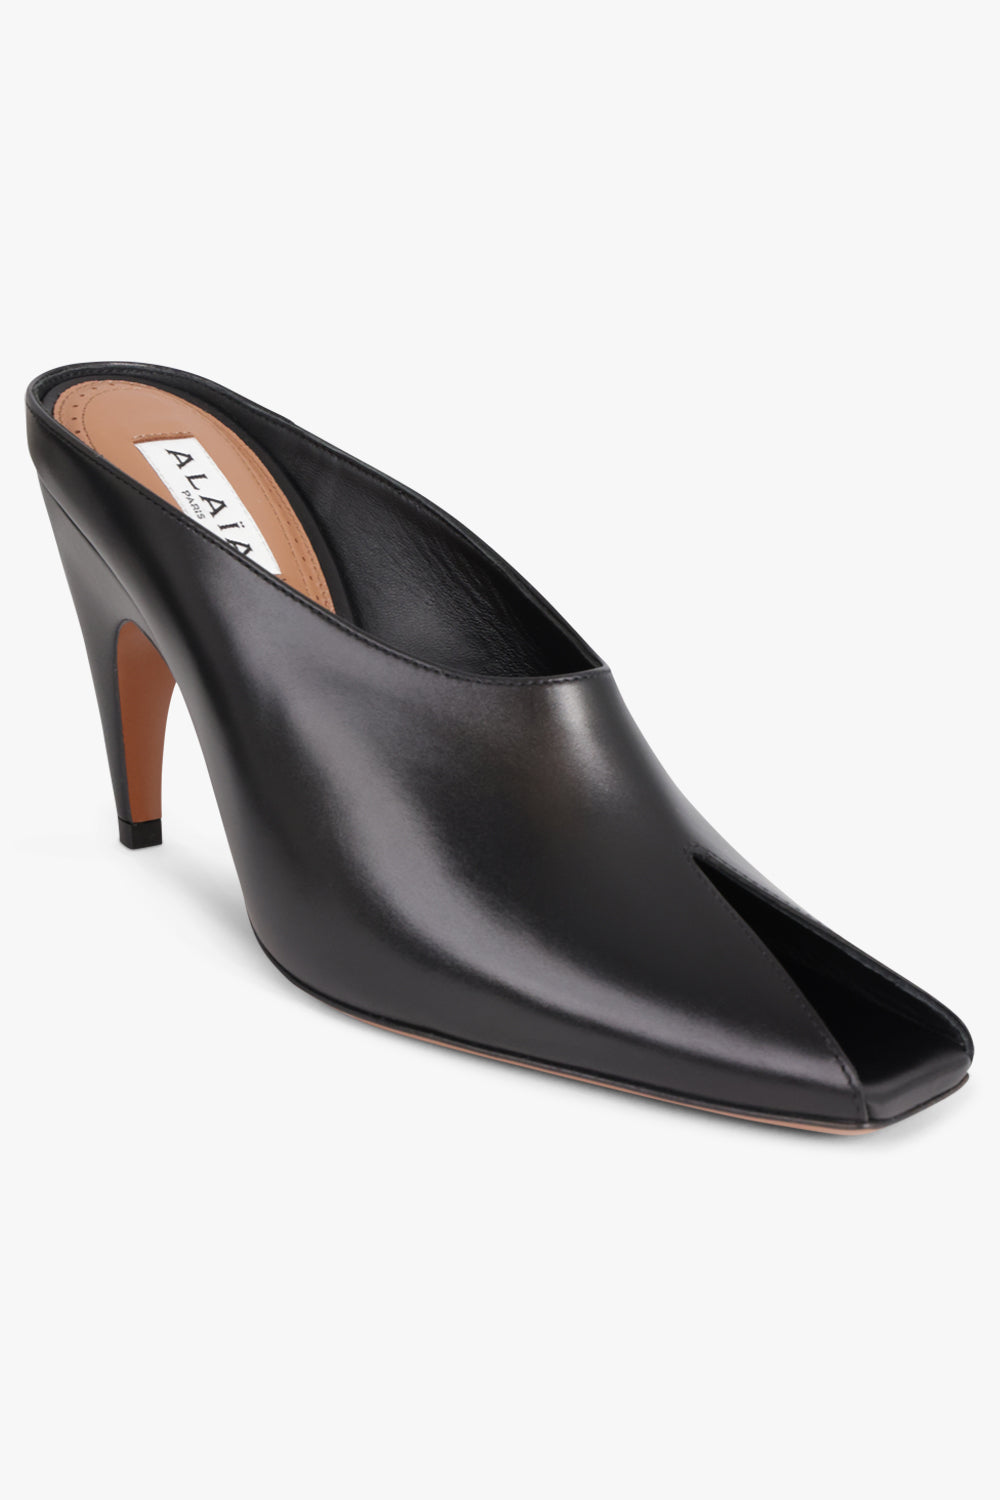 MARCIANO SYBIL Brown Leather Designer Shoes Open Toe Platform Sandals Heels  9.5 | eBay